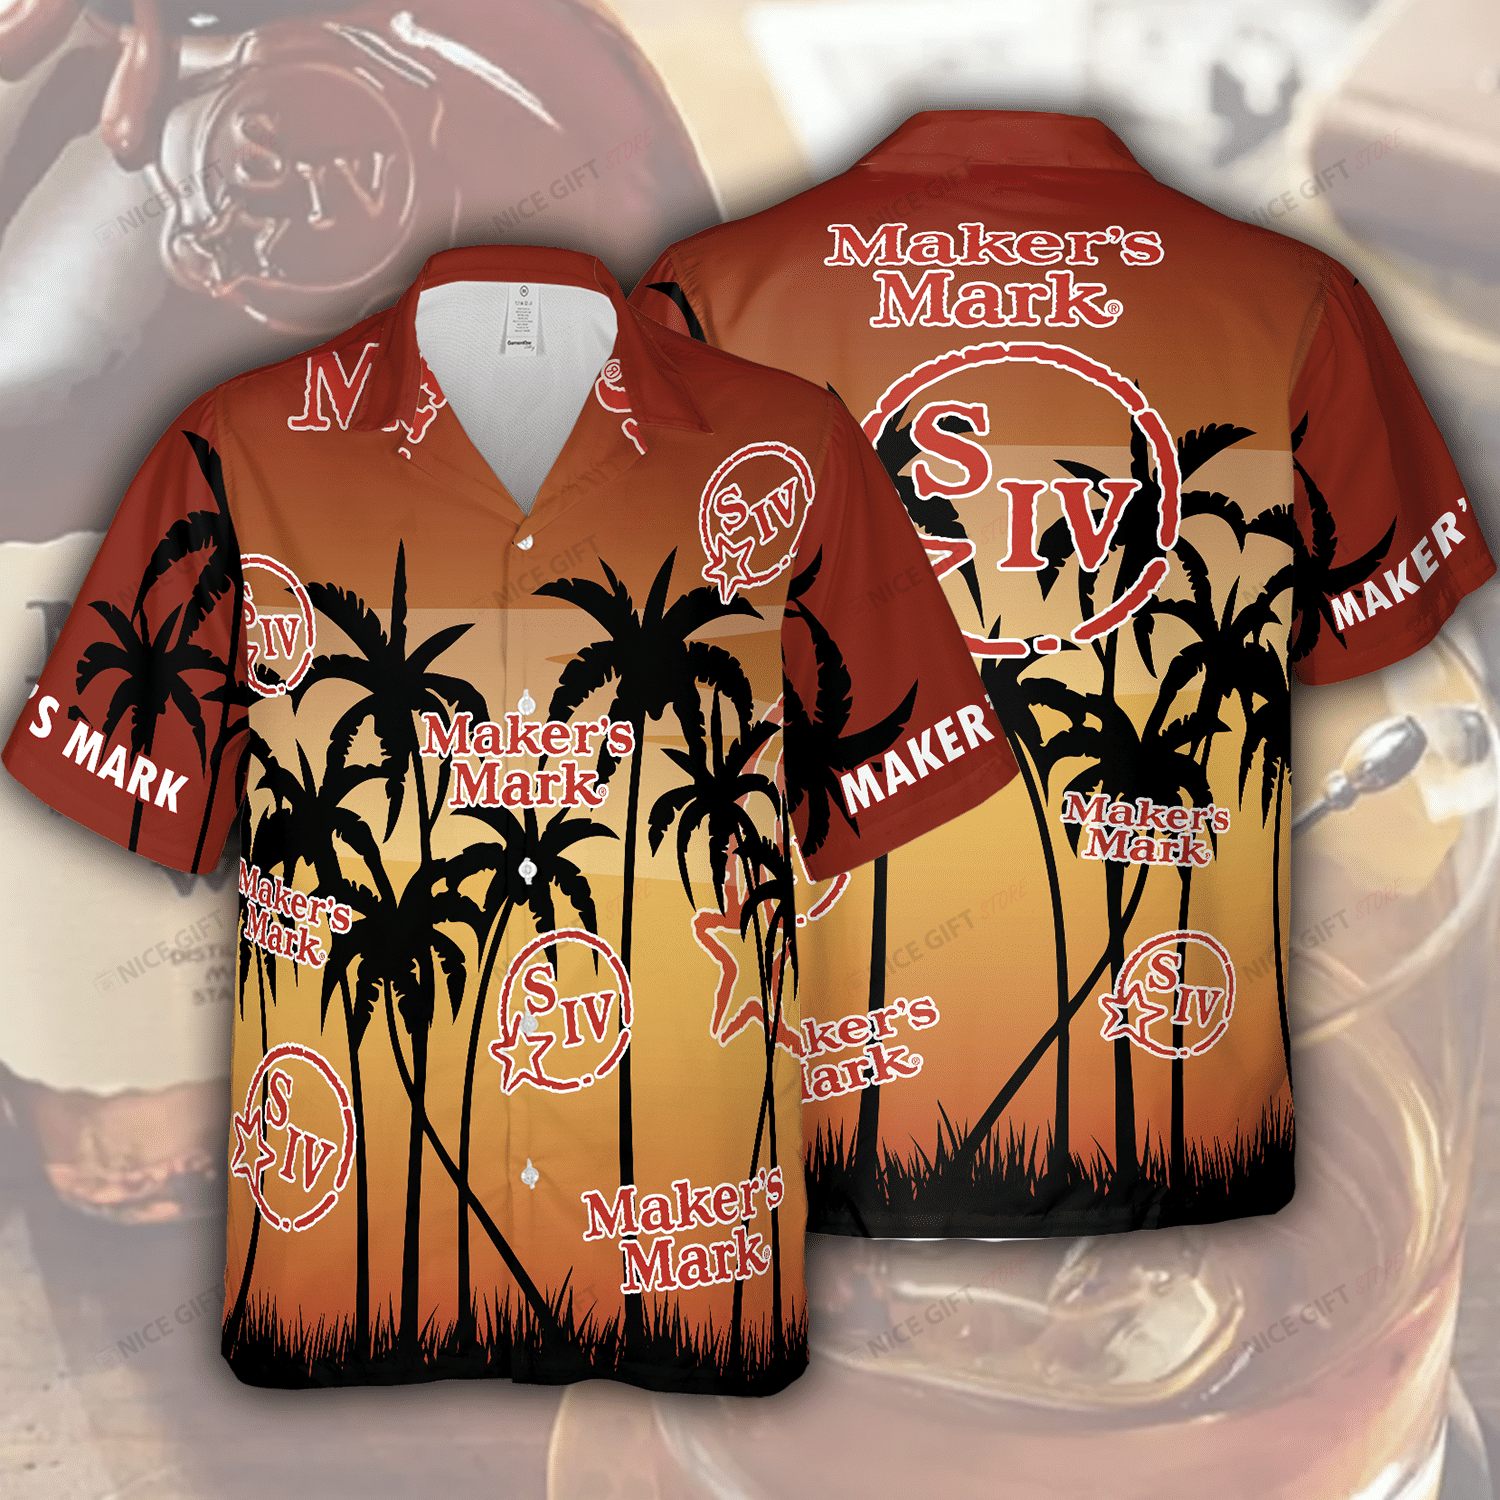 This Hawaiian Shirt Can Be Worn All Summer Long Word2